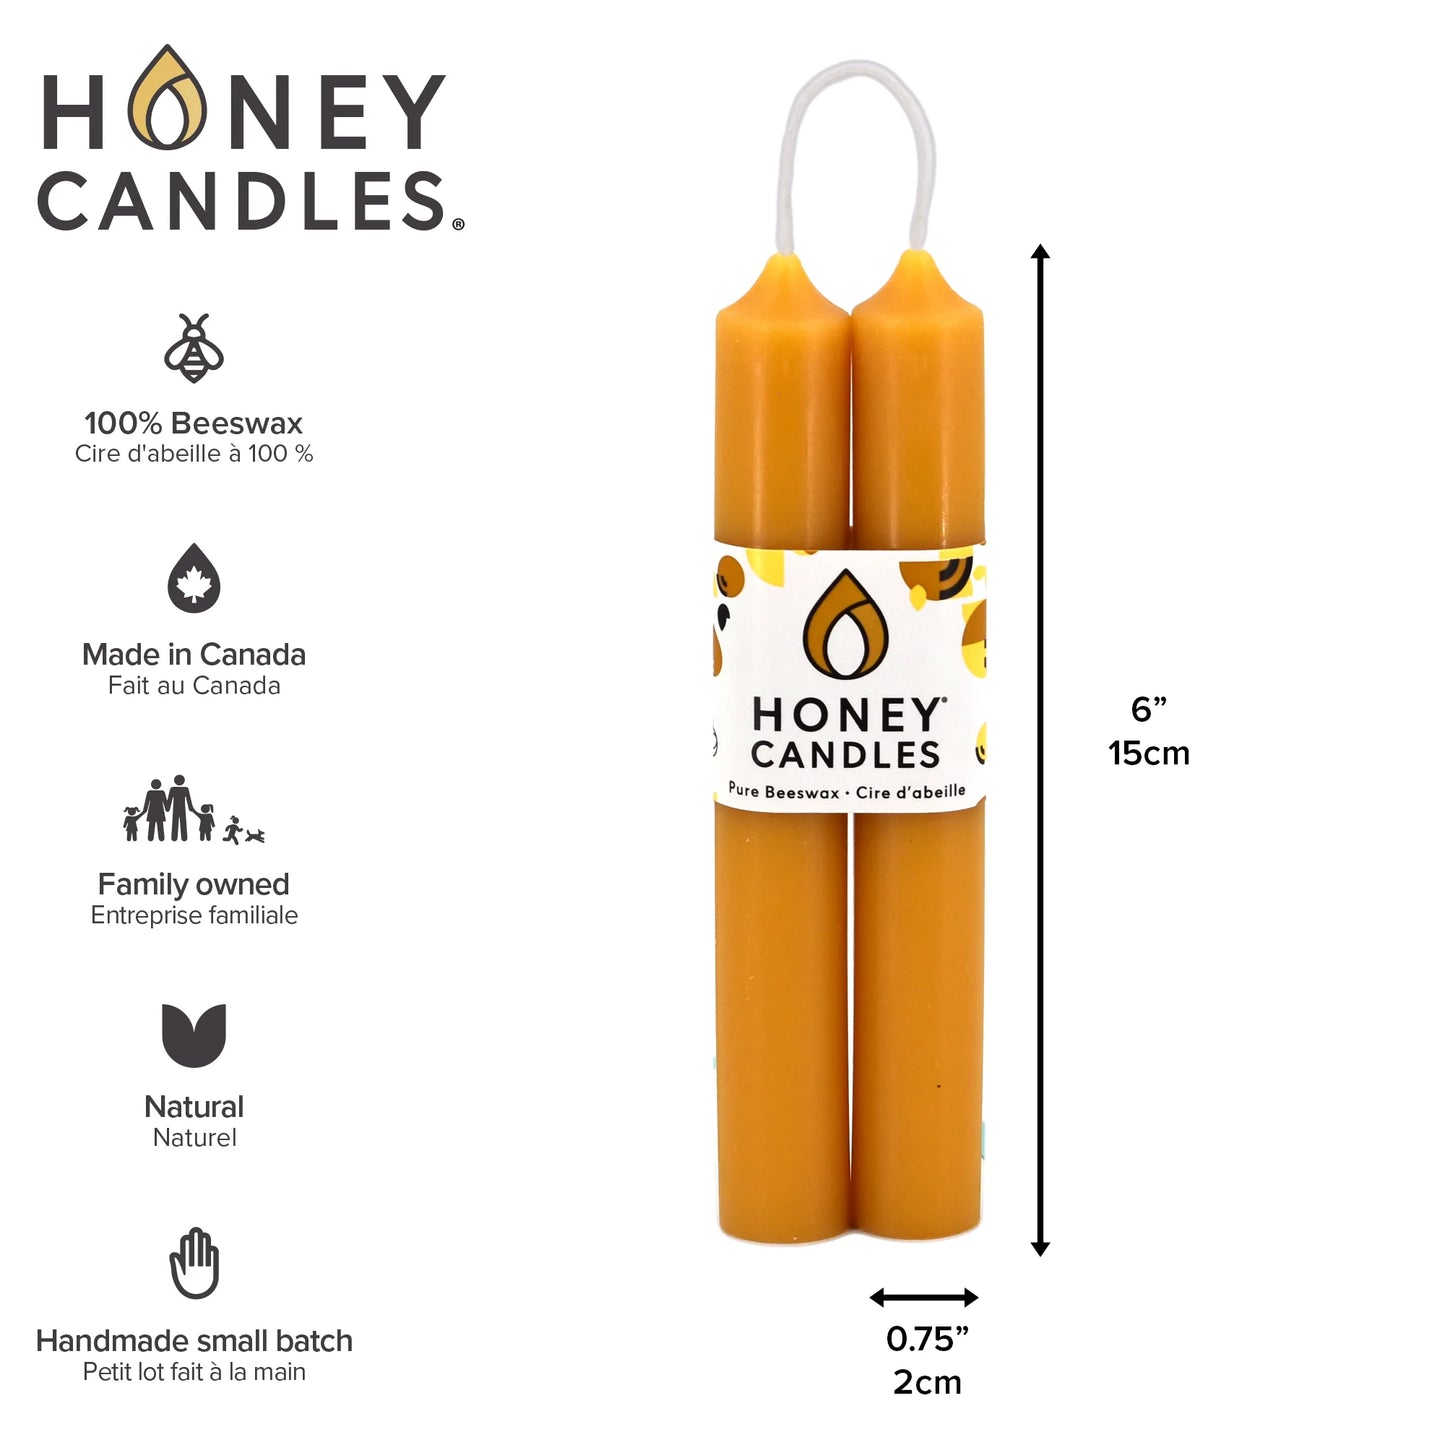 Honey Candles - 6 Inch Natural Tube Pair Beeswax Candles